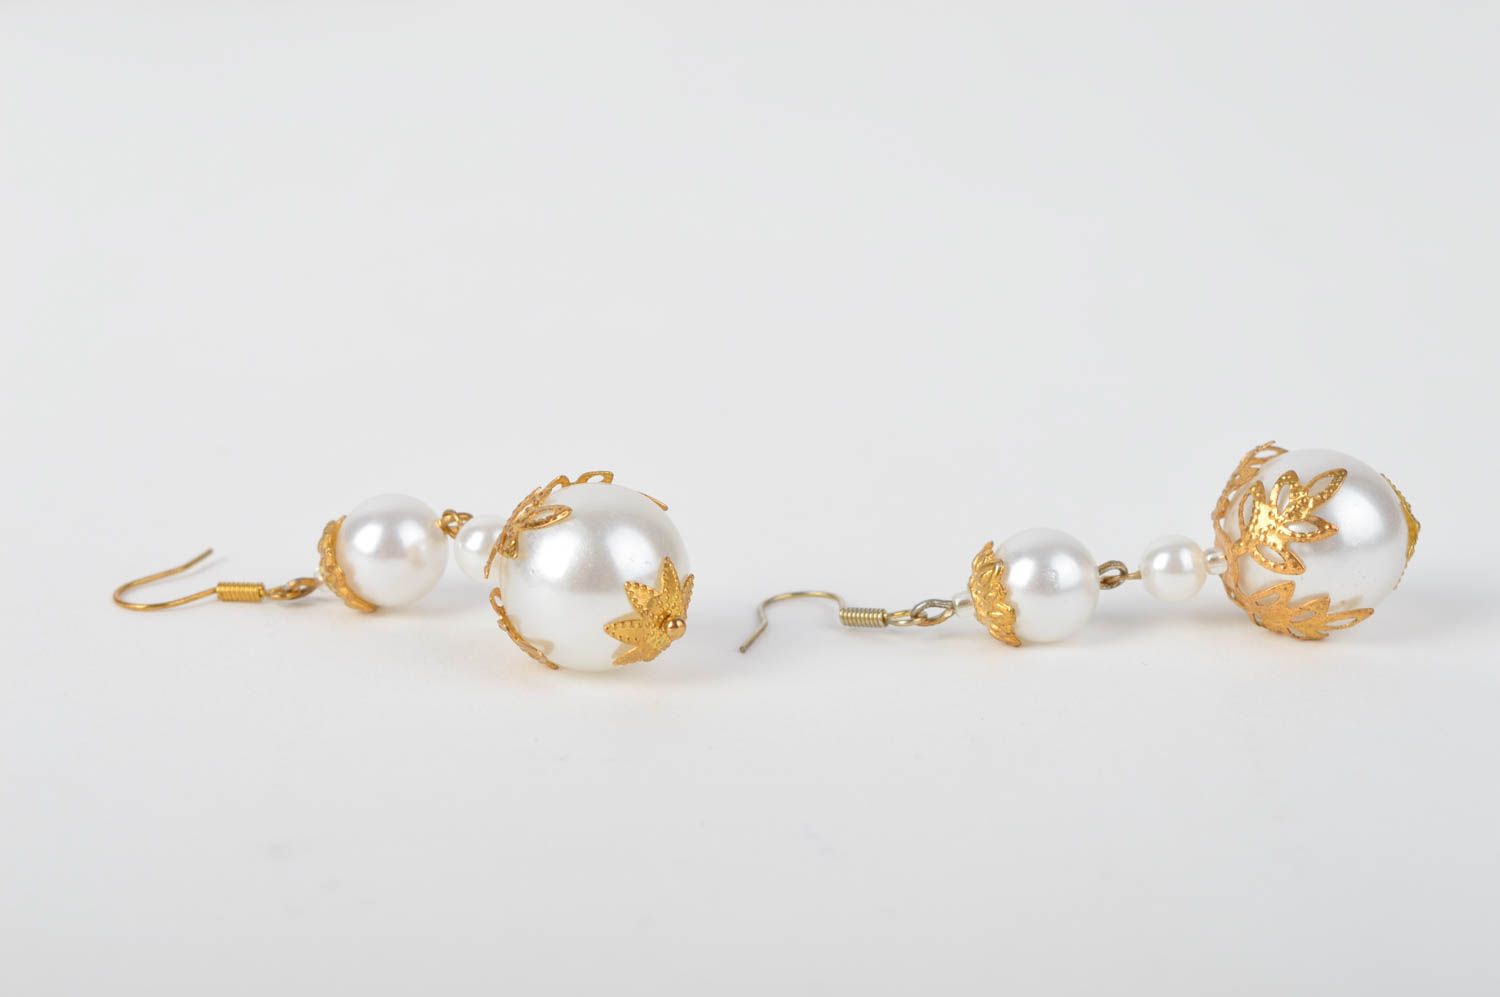 Handmade earrings designer jewelry dangling earrings fashion accessories photo 5